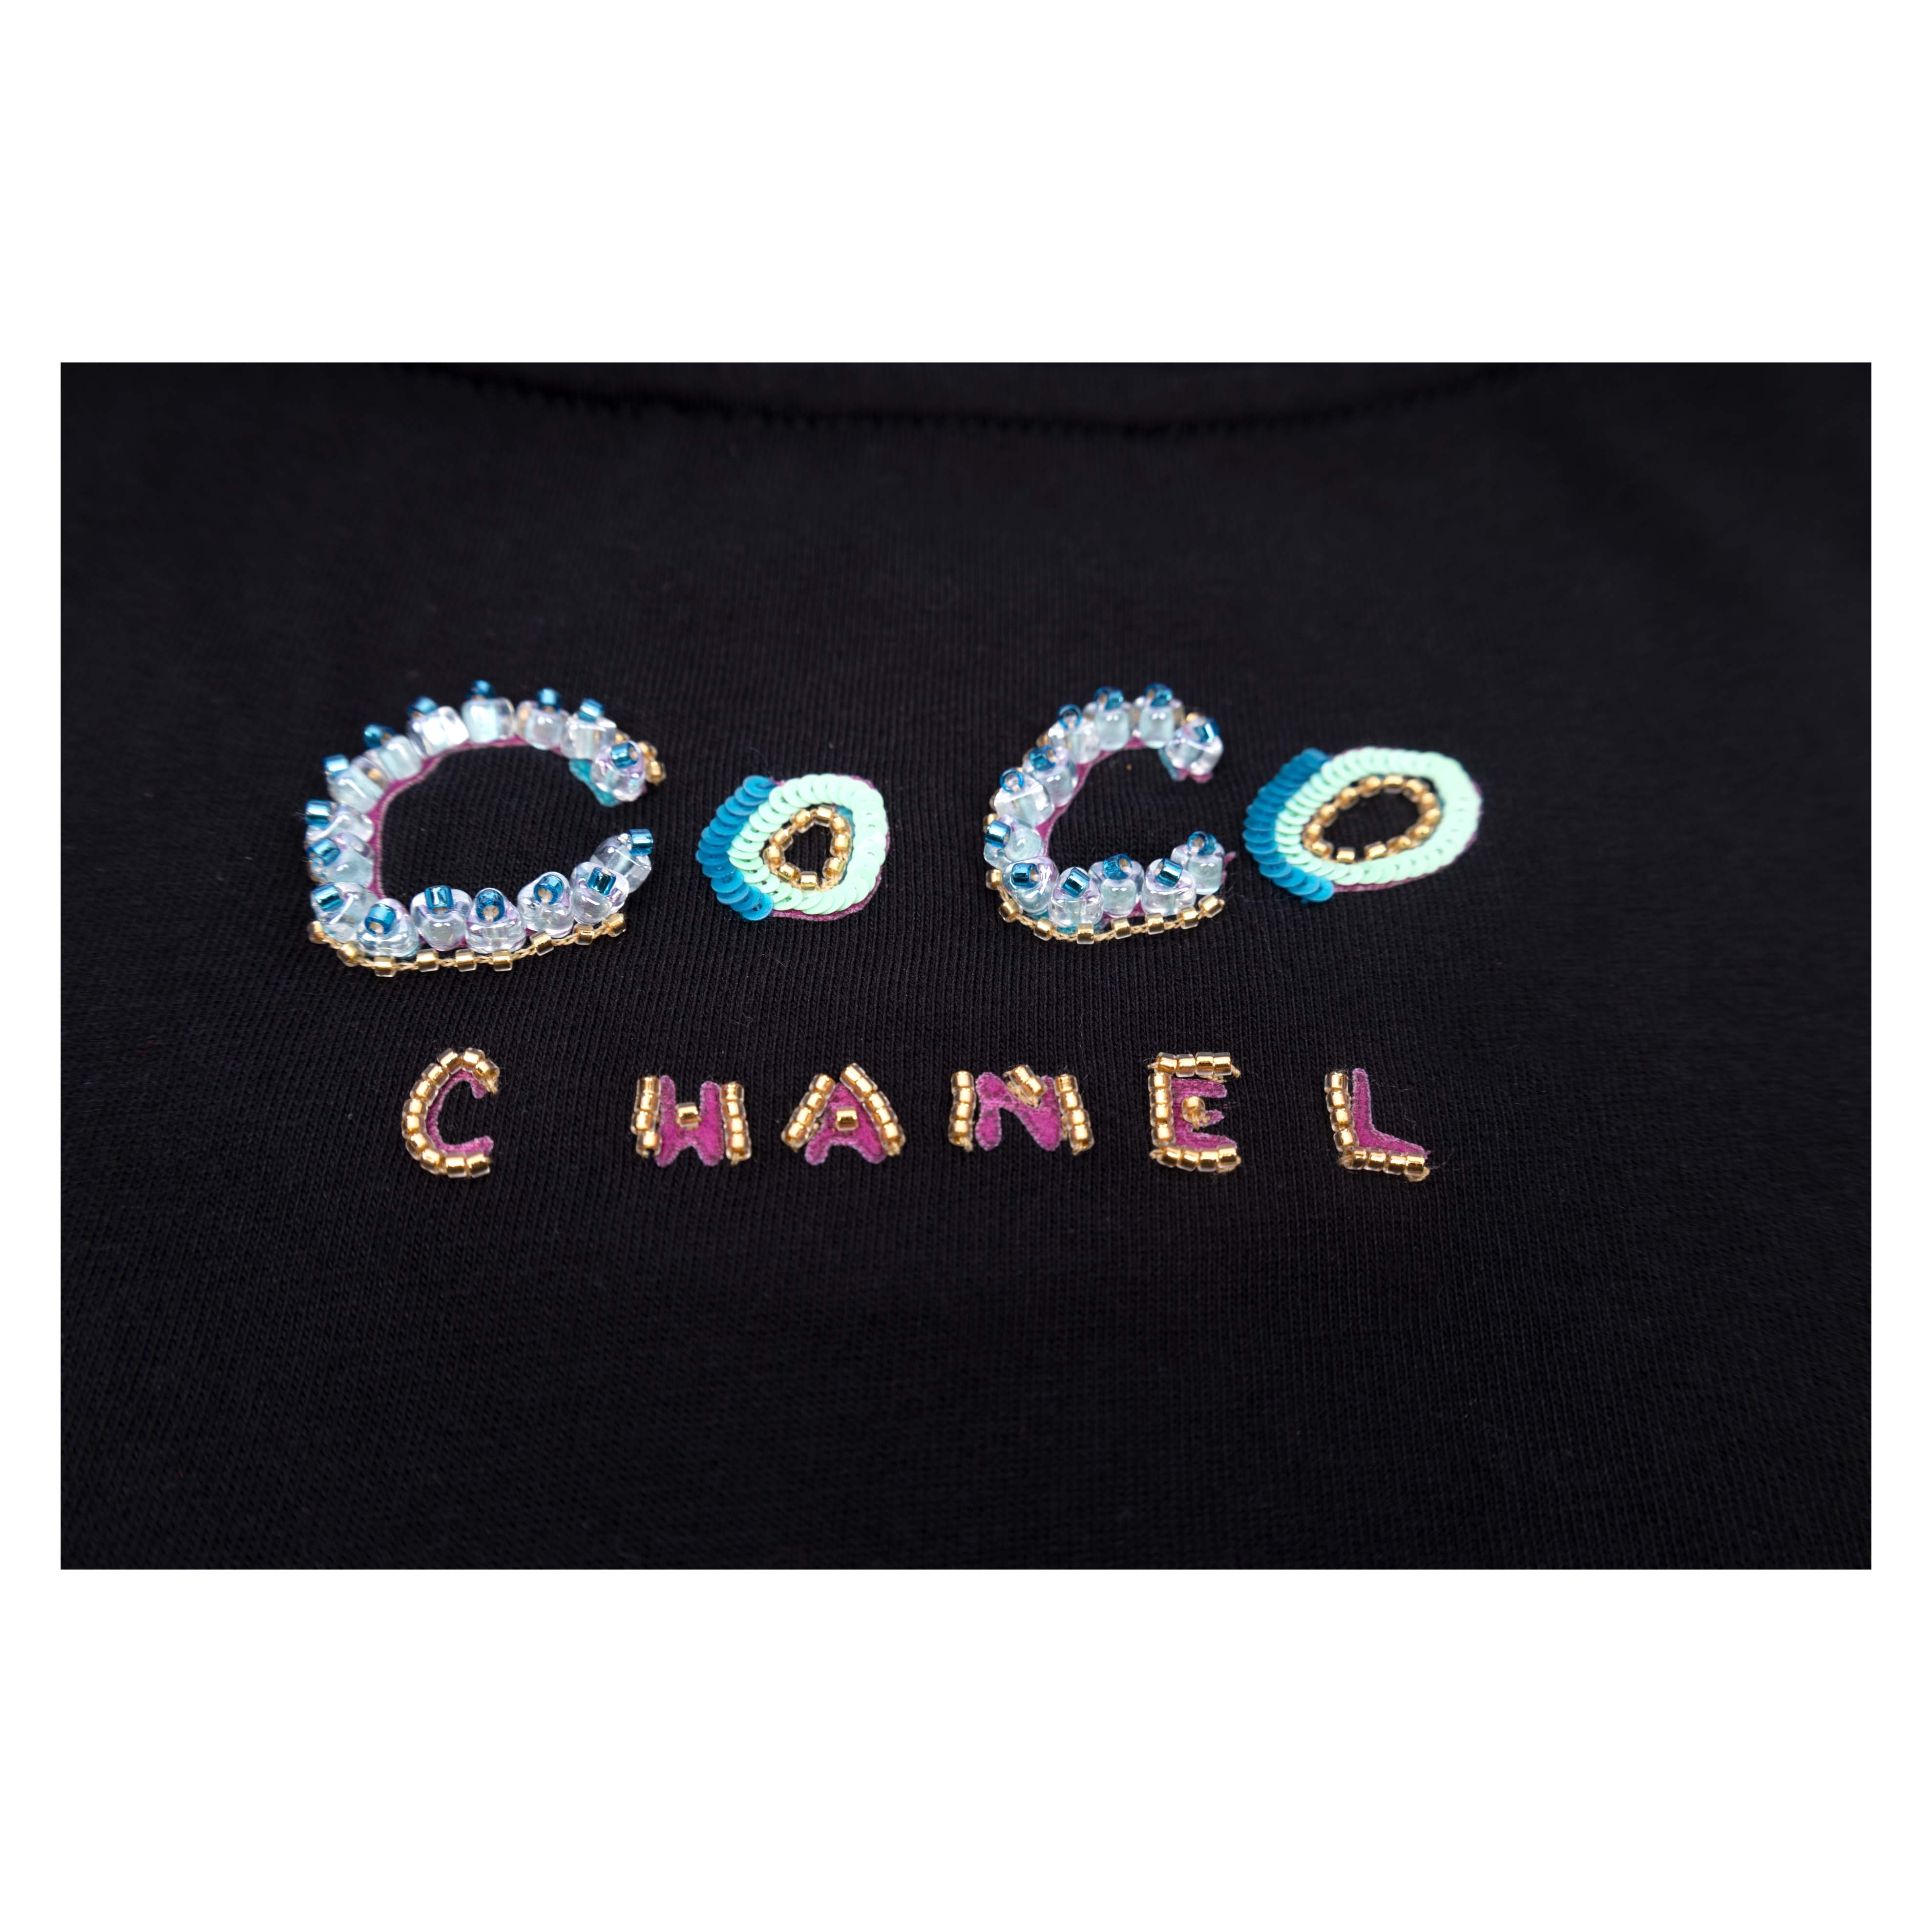 Chanel x Pharrell Black Embellished Cotton T-Shirt - '10s